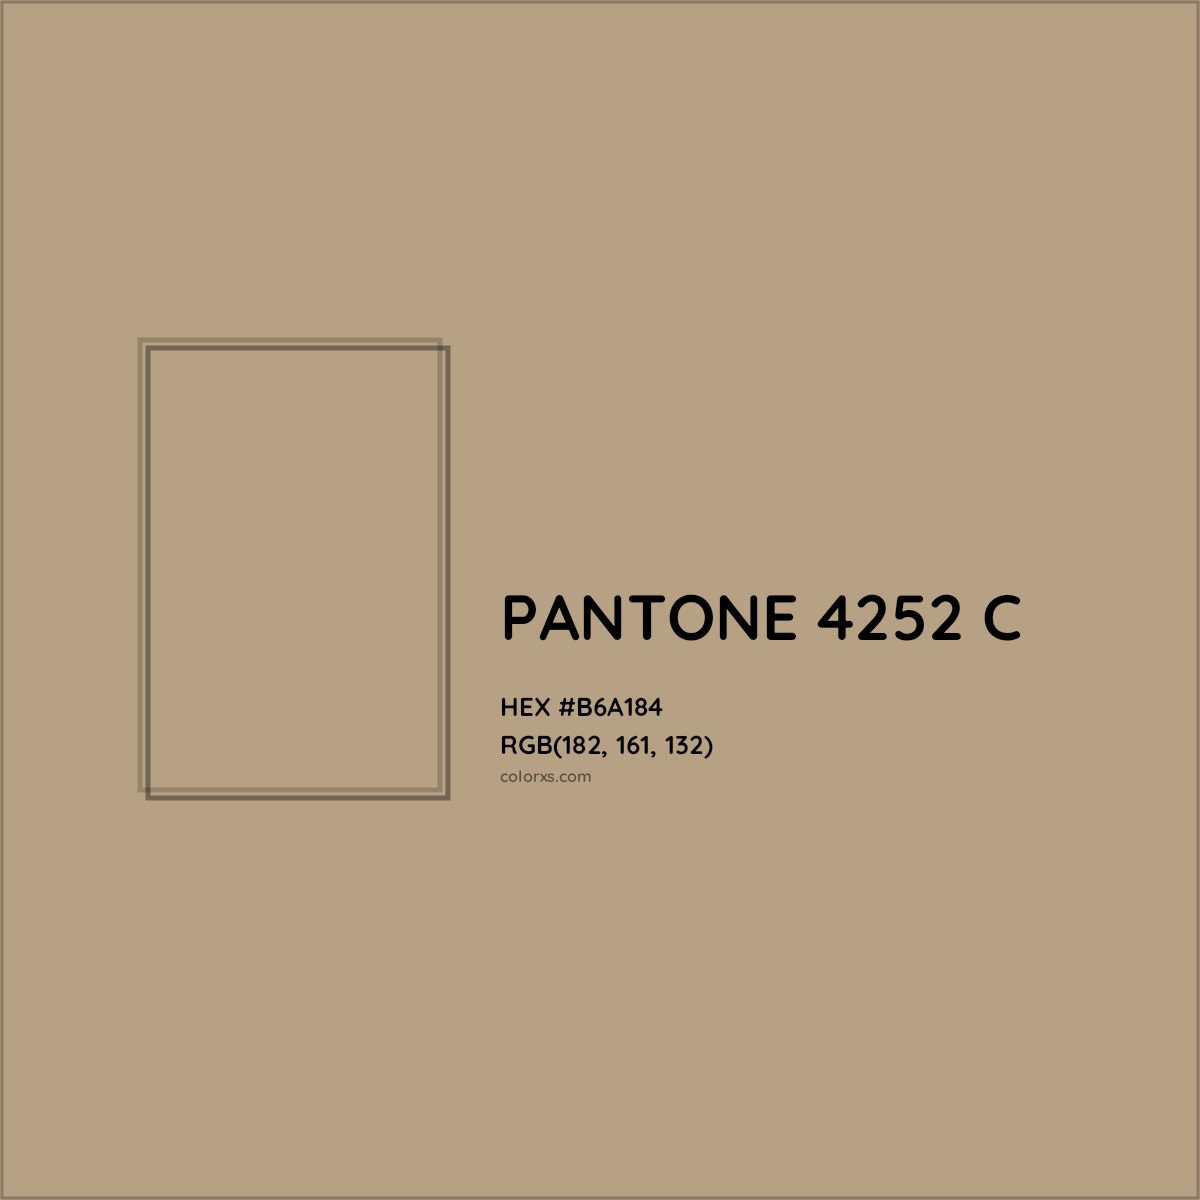 HEX #B6A184 PANTONE 4252 C CMS Pantone PMS - Color Code